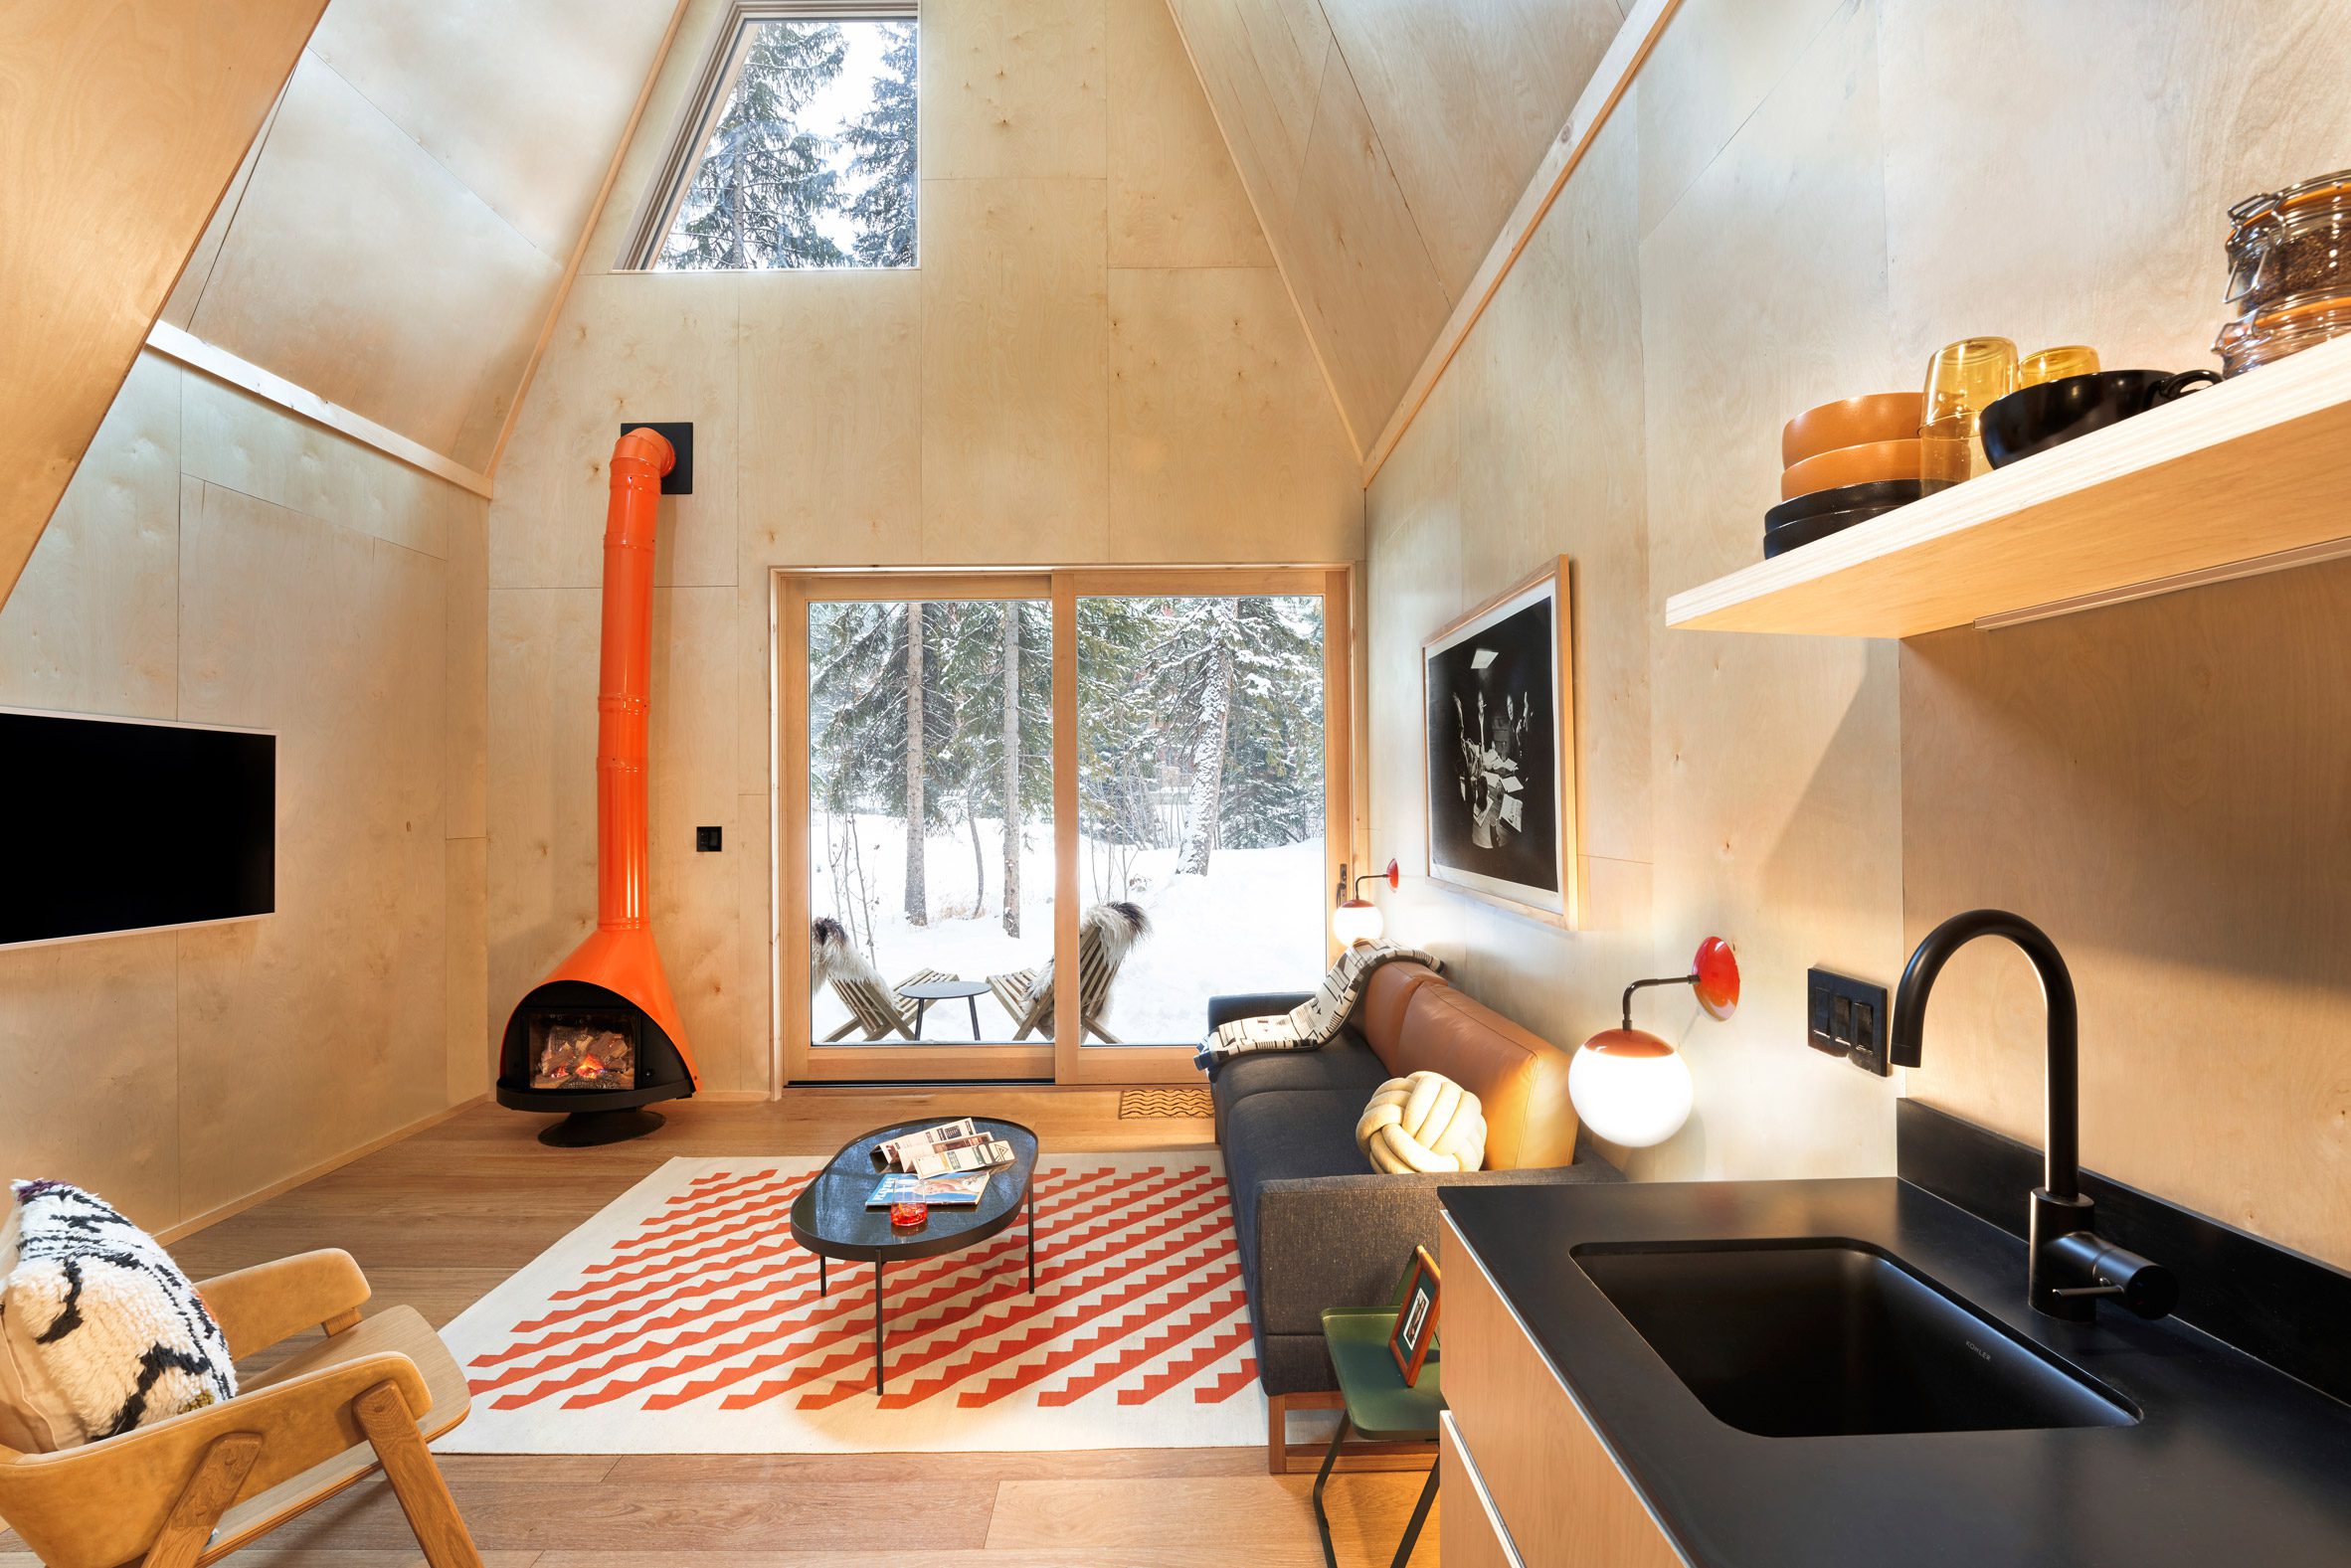 Orange custom Malm fireplace in paneled cabin interior